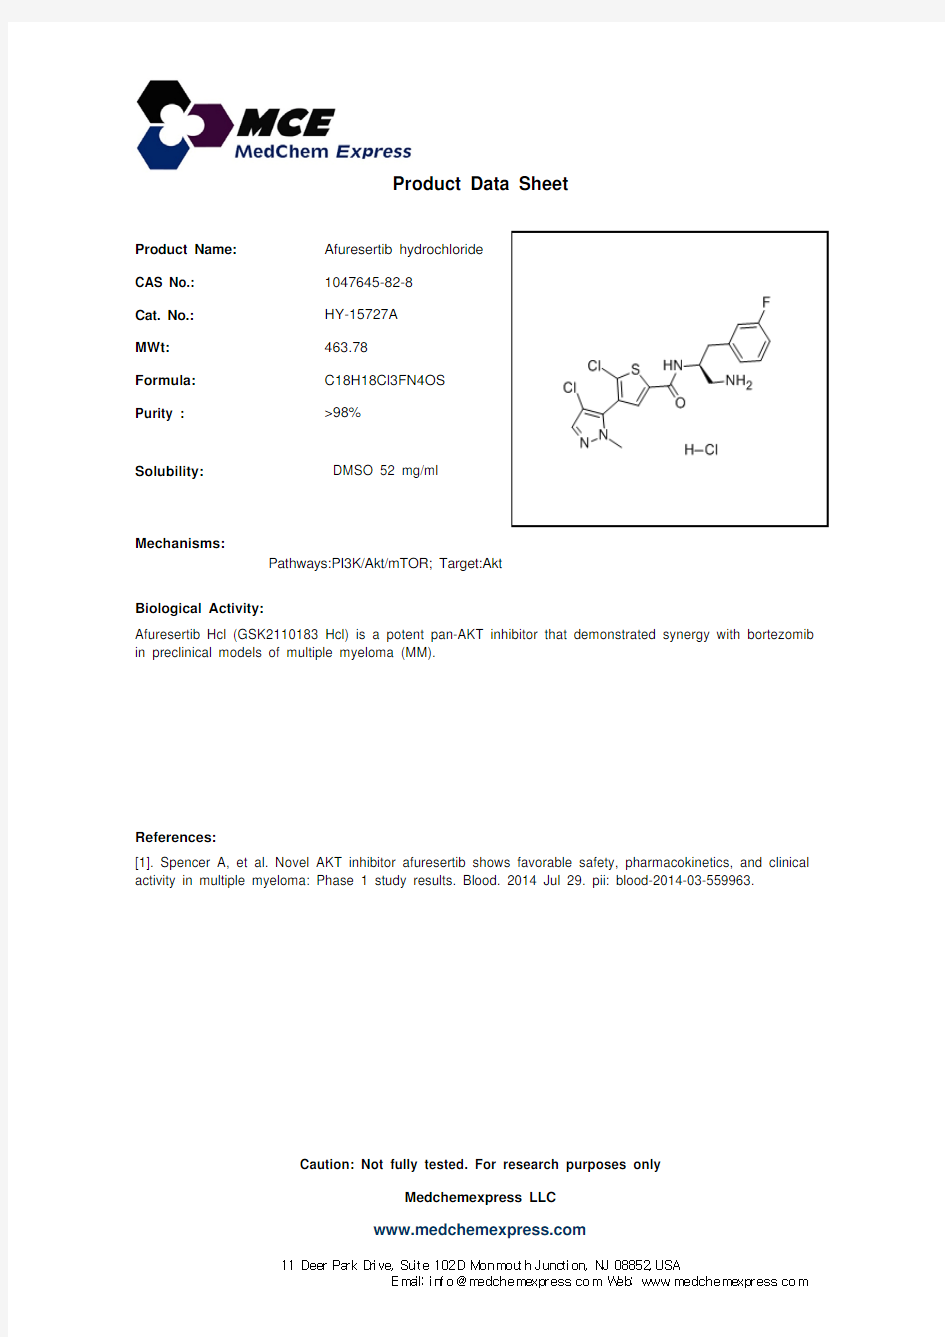 Afuresertib hydrochloride_1047645-82-8_DataSheet_MedChemExpress